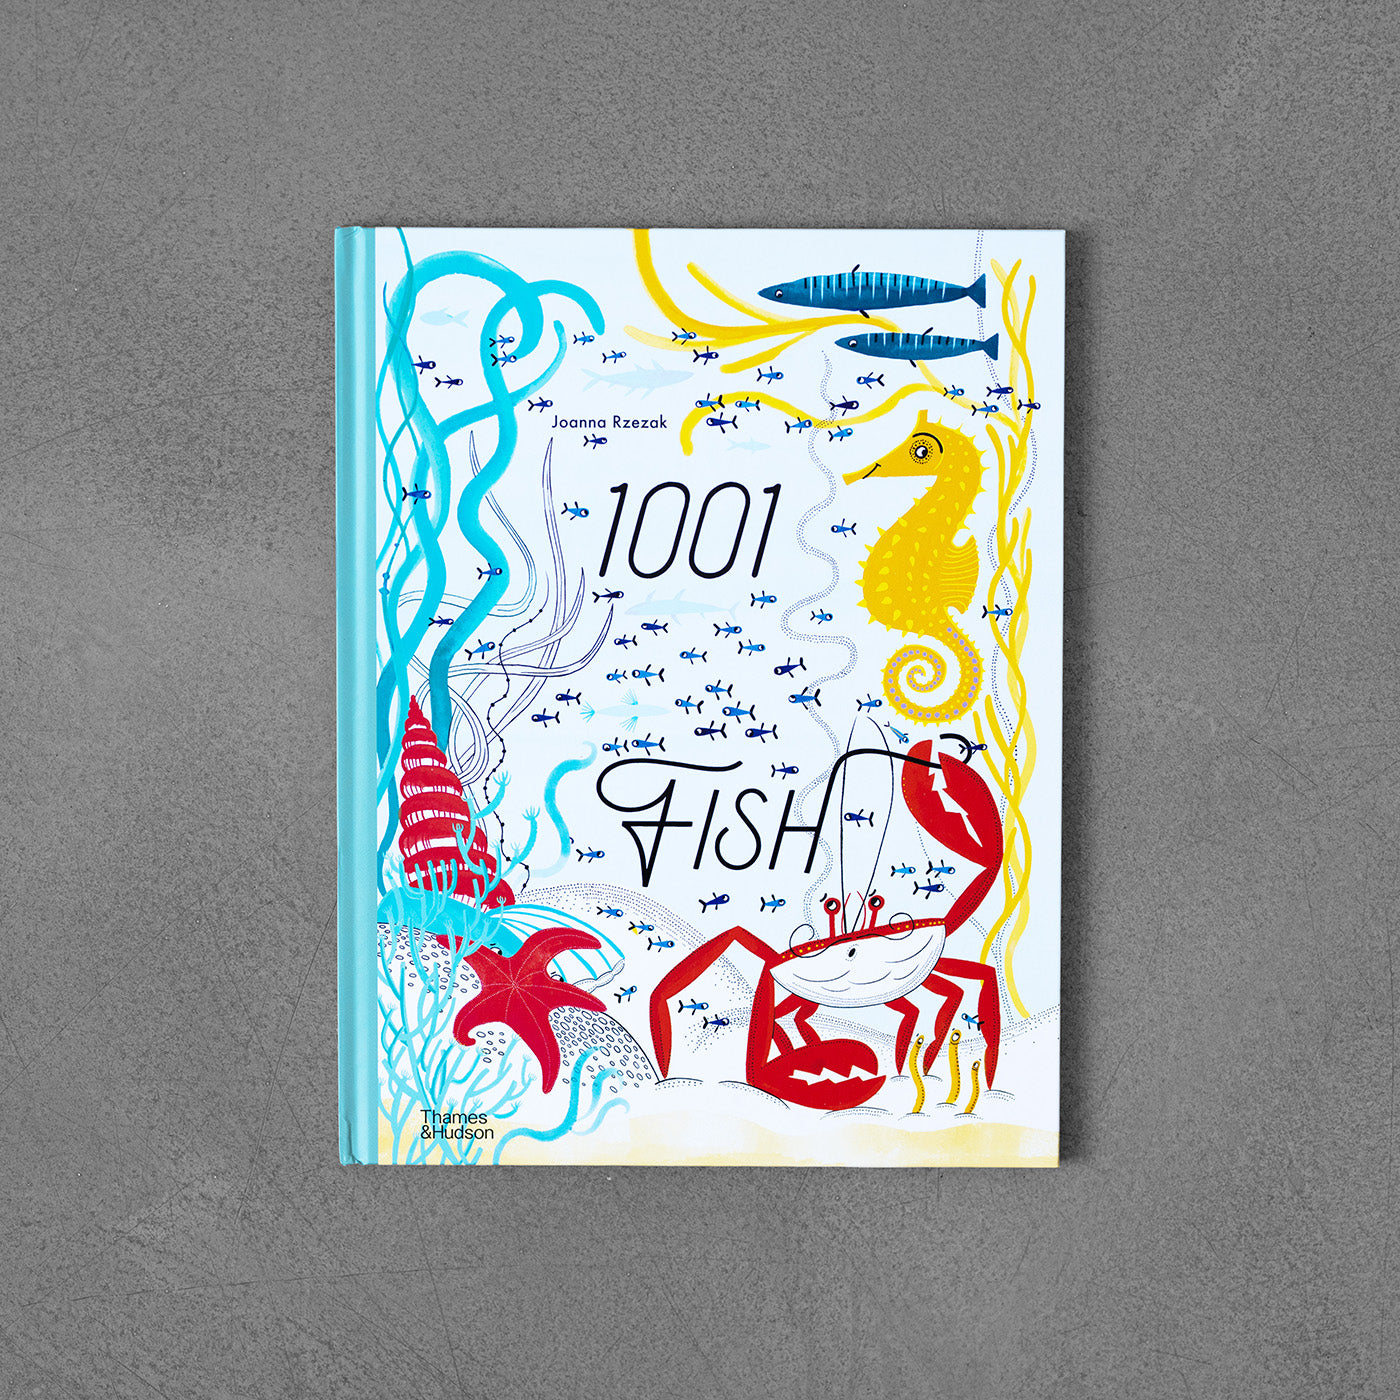 1001 Fish - Joanna Rzezak